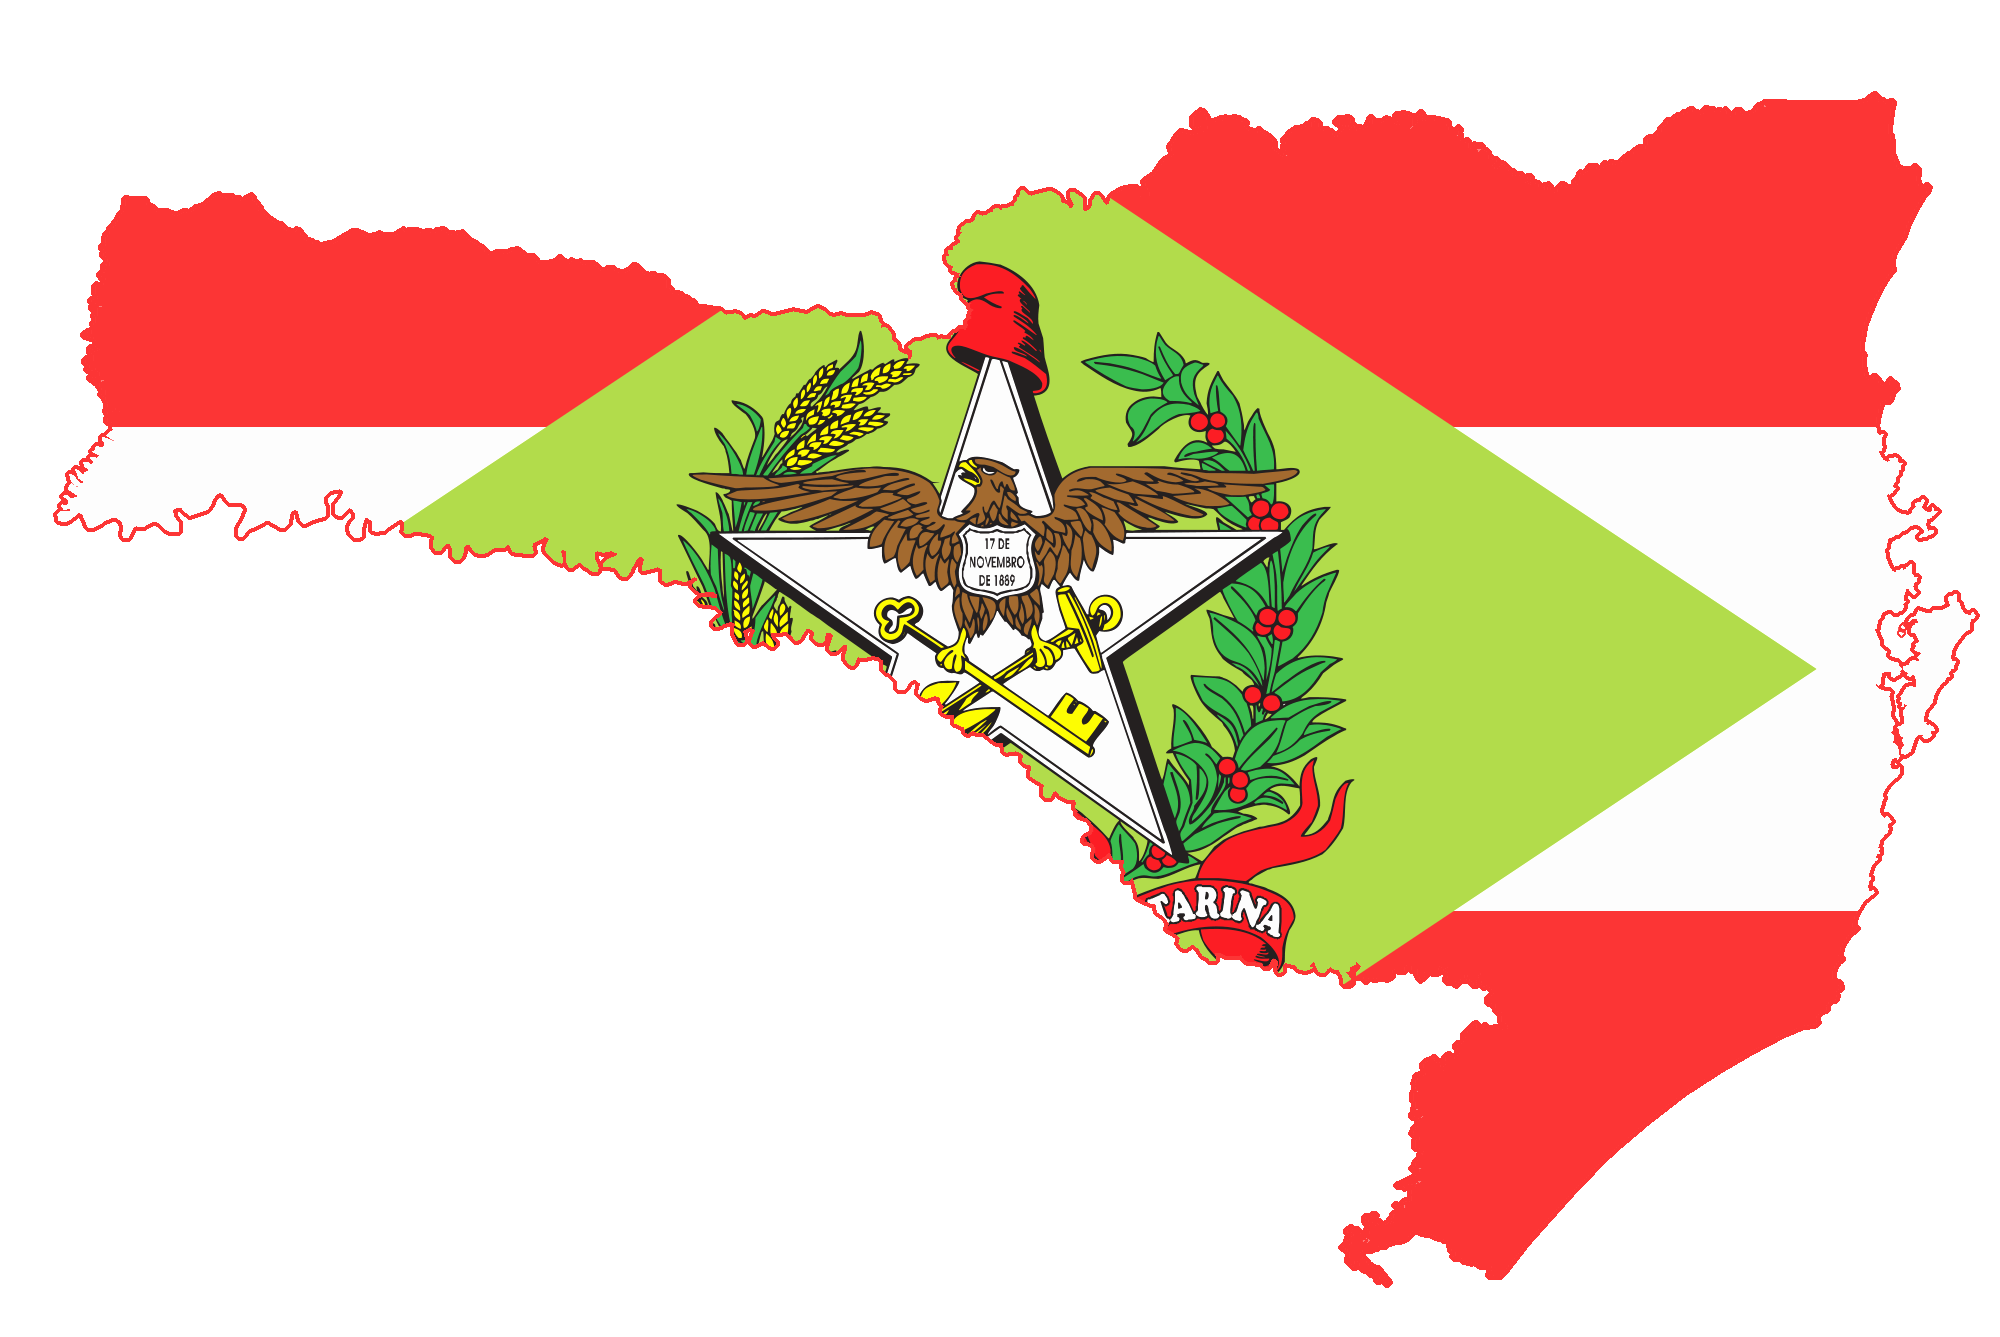 File:Bandeira do Alto Minho.jpg - Wikimedia Commons